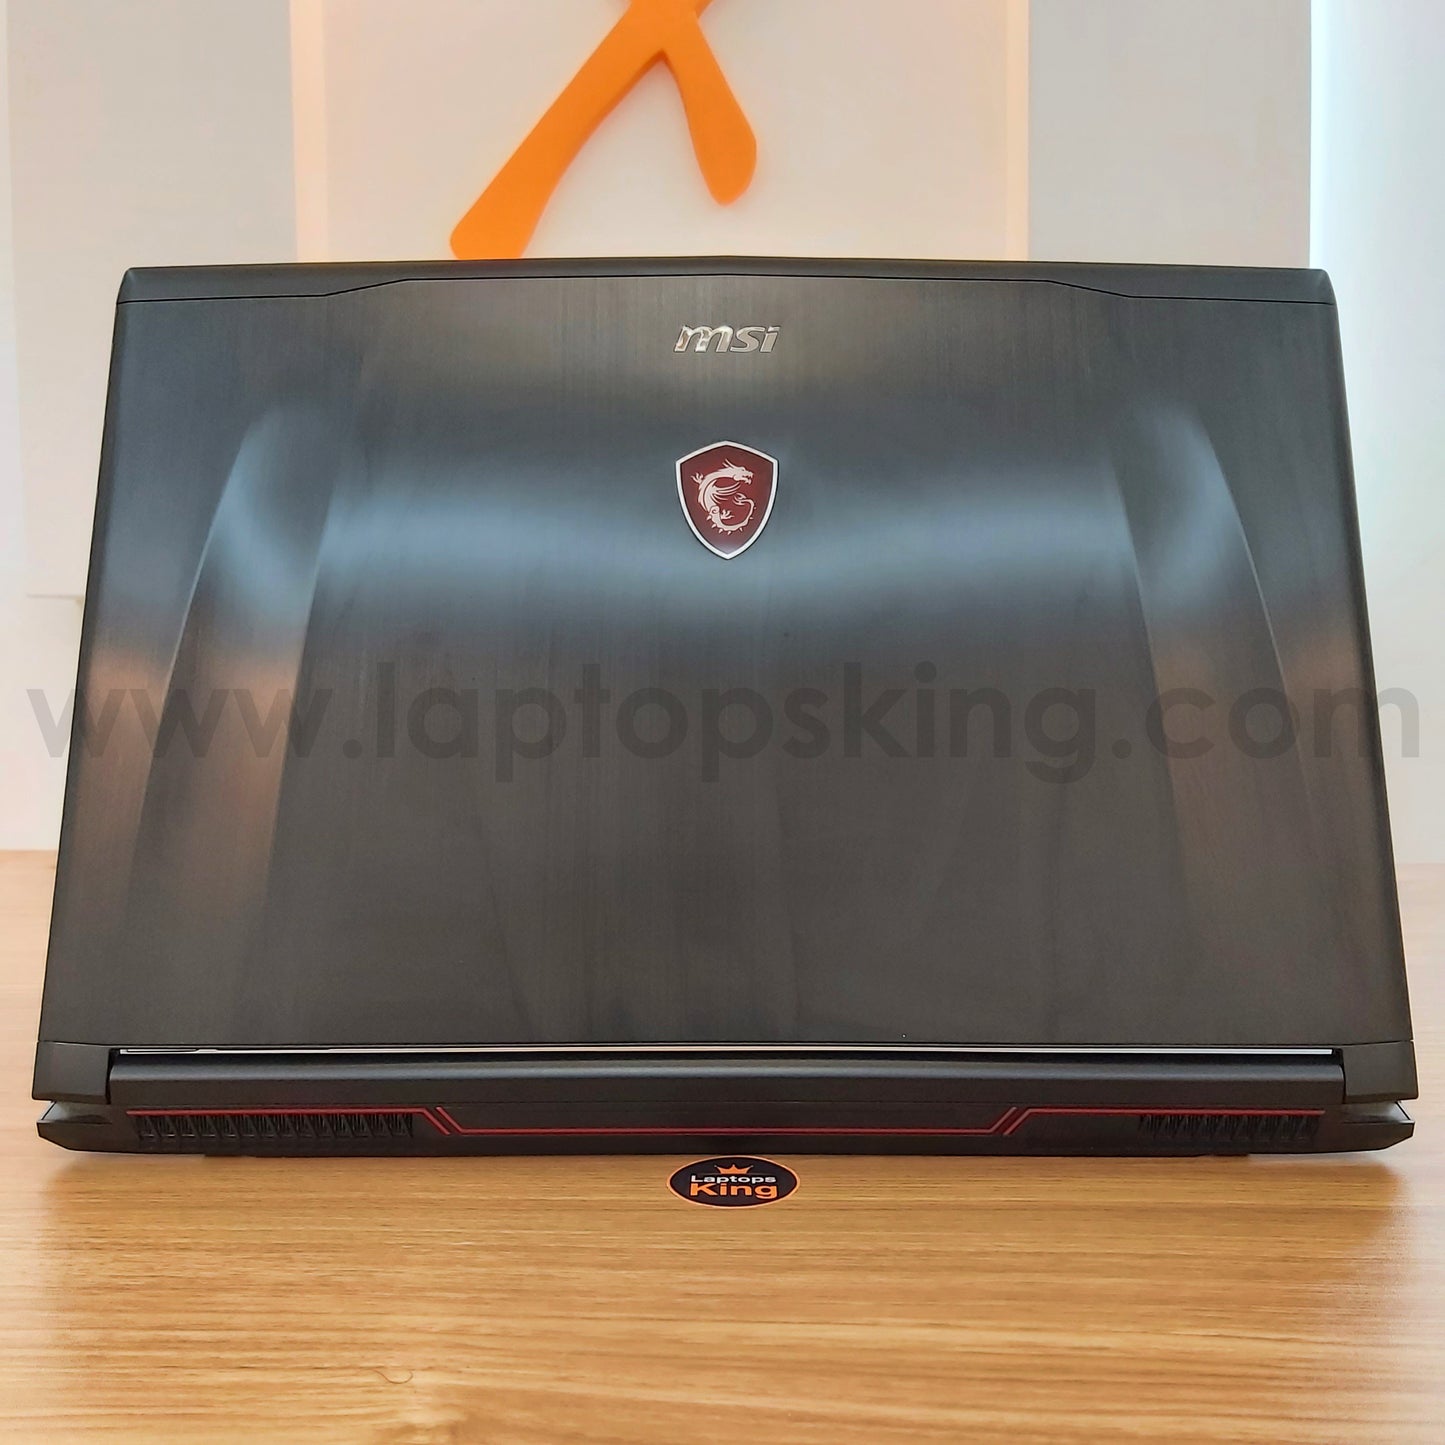 MSI GF72 8RD i7-8750h GTX 1050 Ti SteelSeries 120Hz 17.3" Gaming Laptop (Used Very Clean)